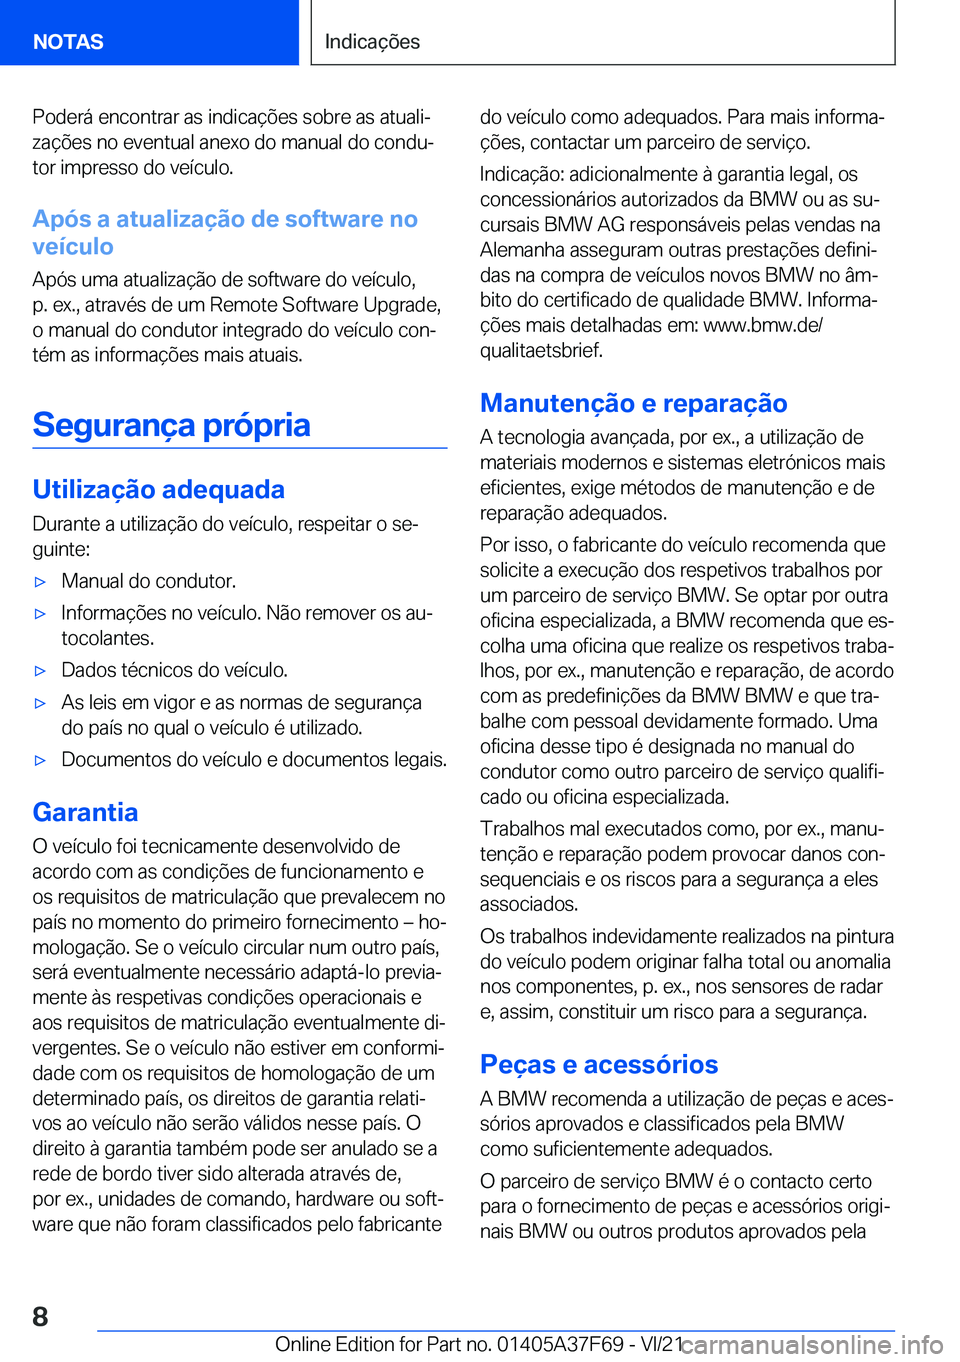 BMW M3 2022  Manual do condutor (in Portuguese) �P�o�d�e�r�á��e�n�c�o�n�t�r�a�r��a�s��i�n�d�i�c�a�